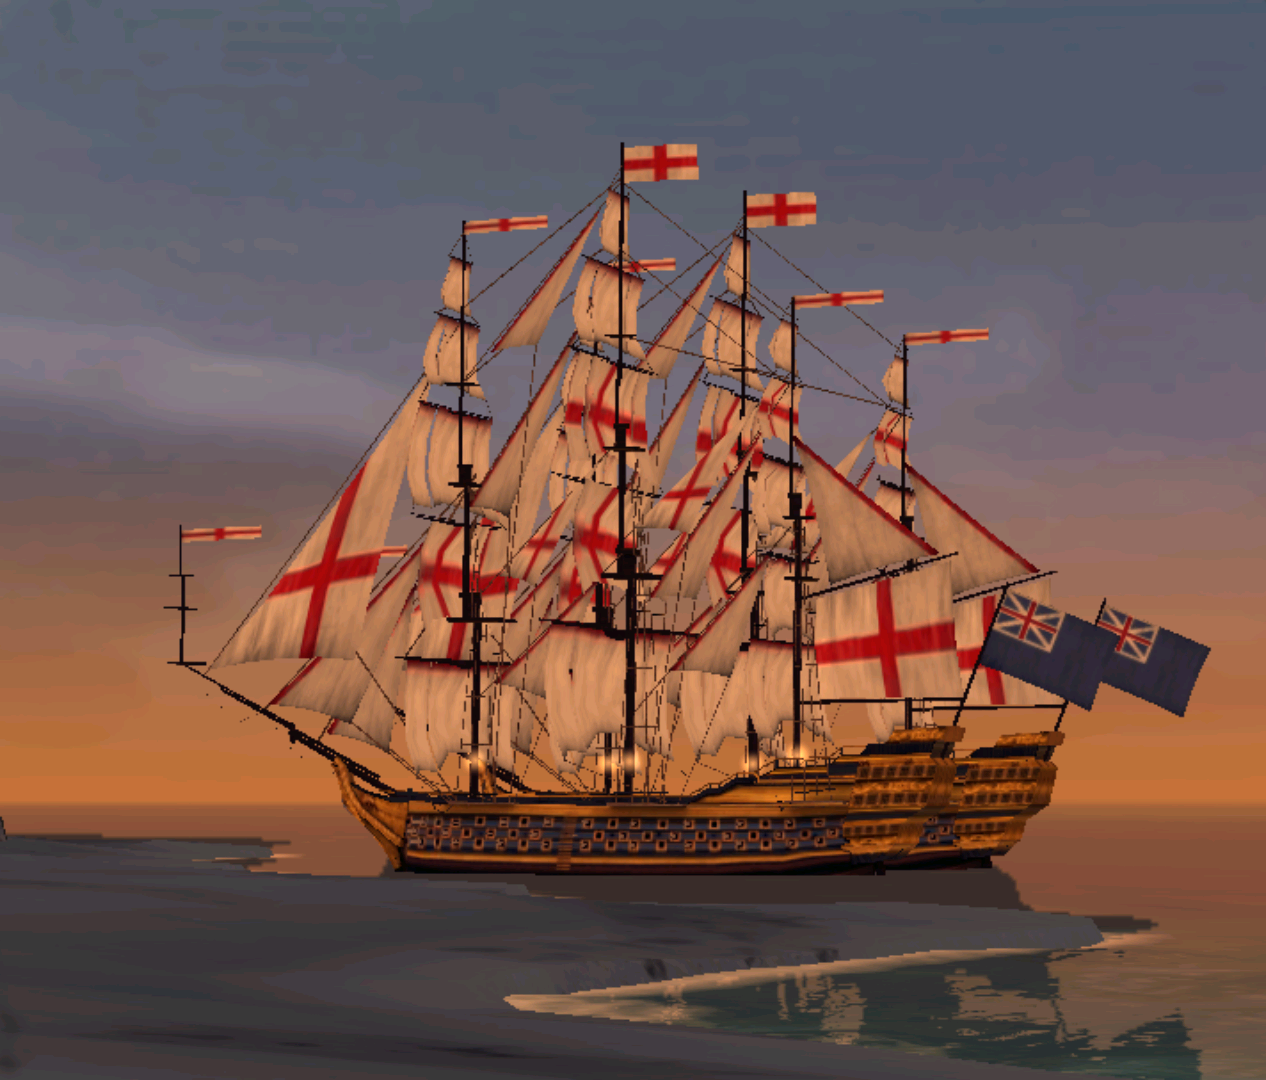 Assassin's Creed Pirates HMS пемброк